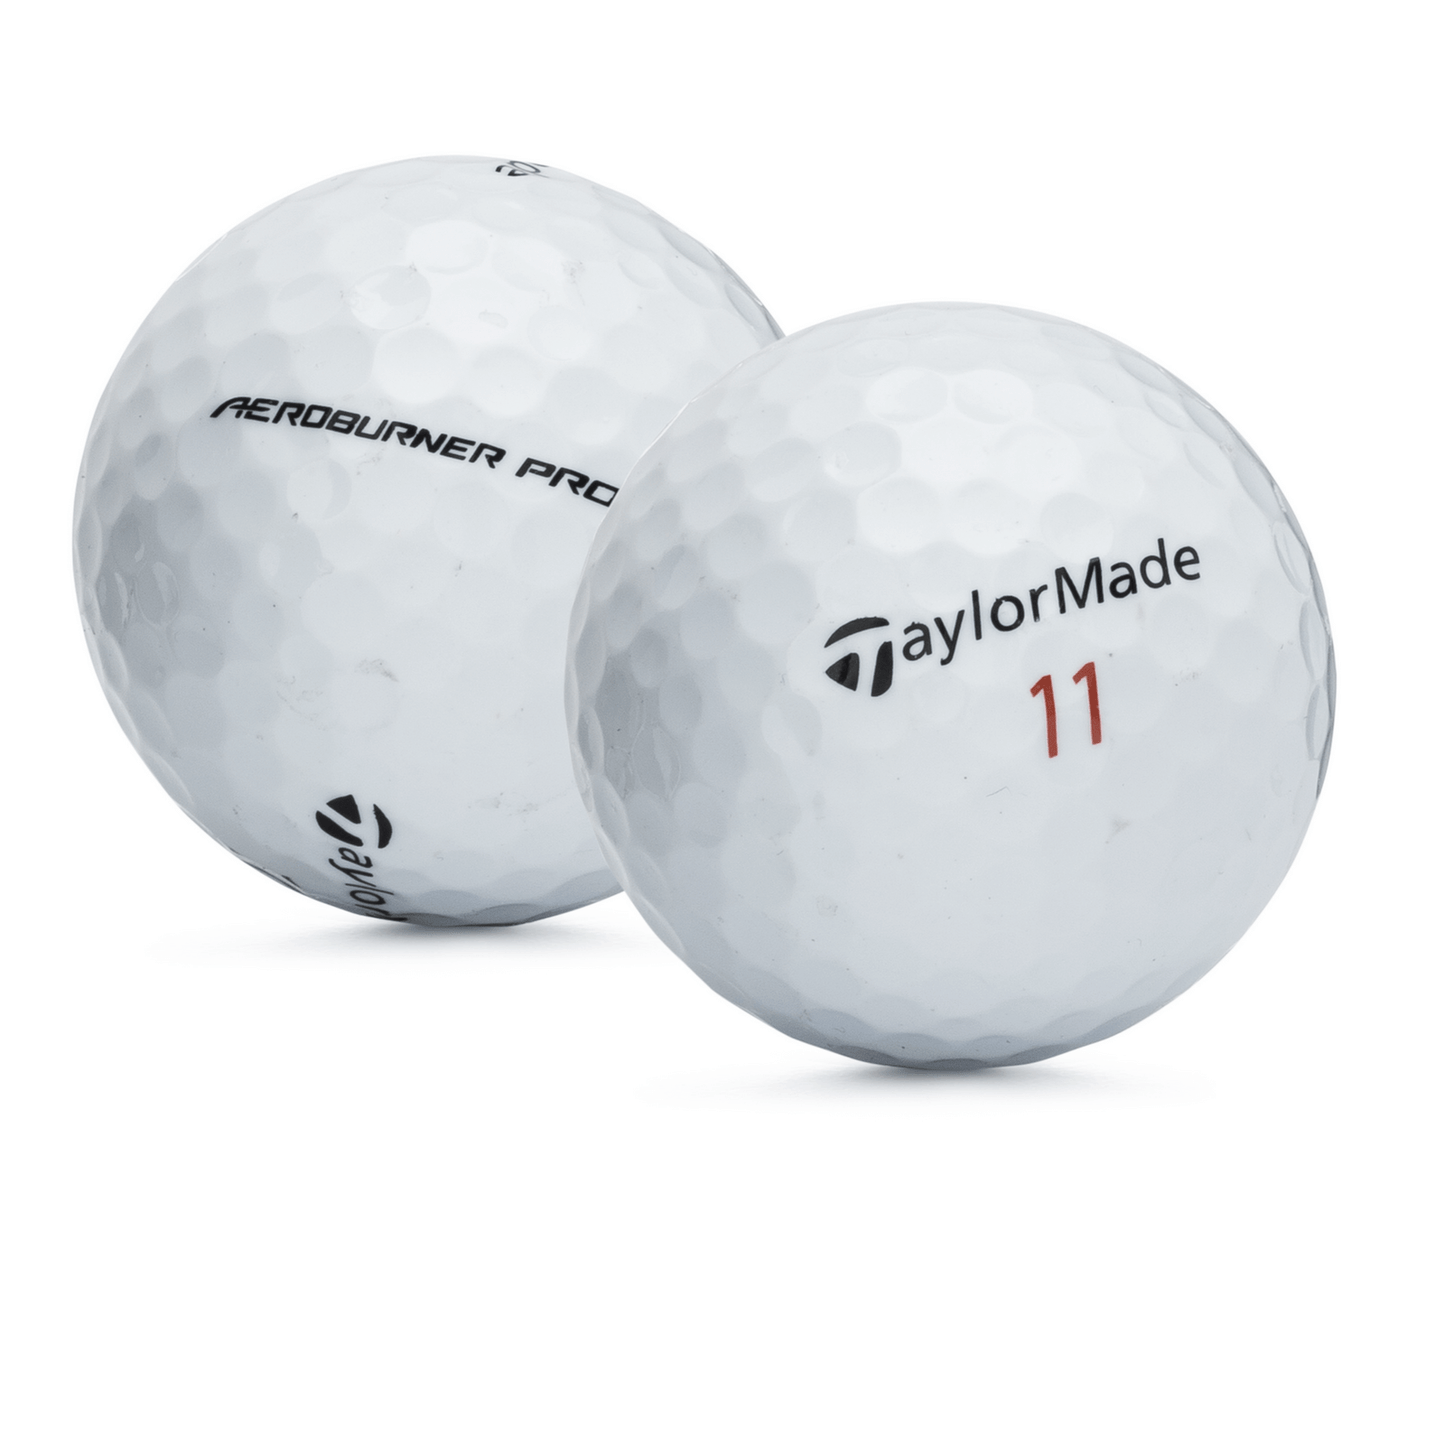 Used TaylorMade AeroBurner Pro Golf Balls - 1 Dozen